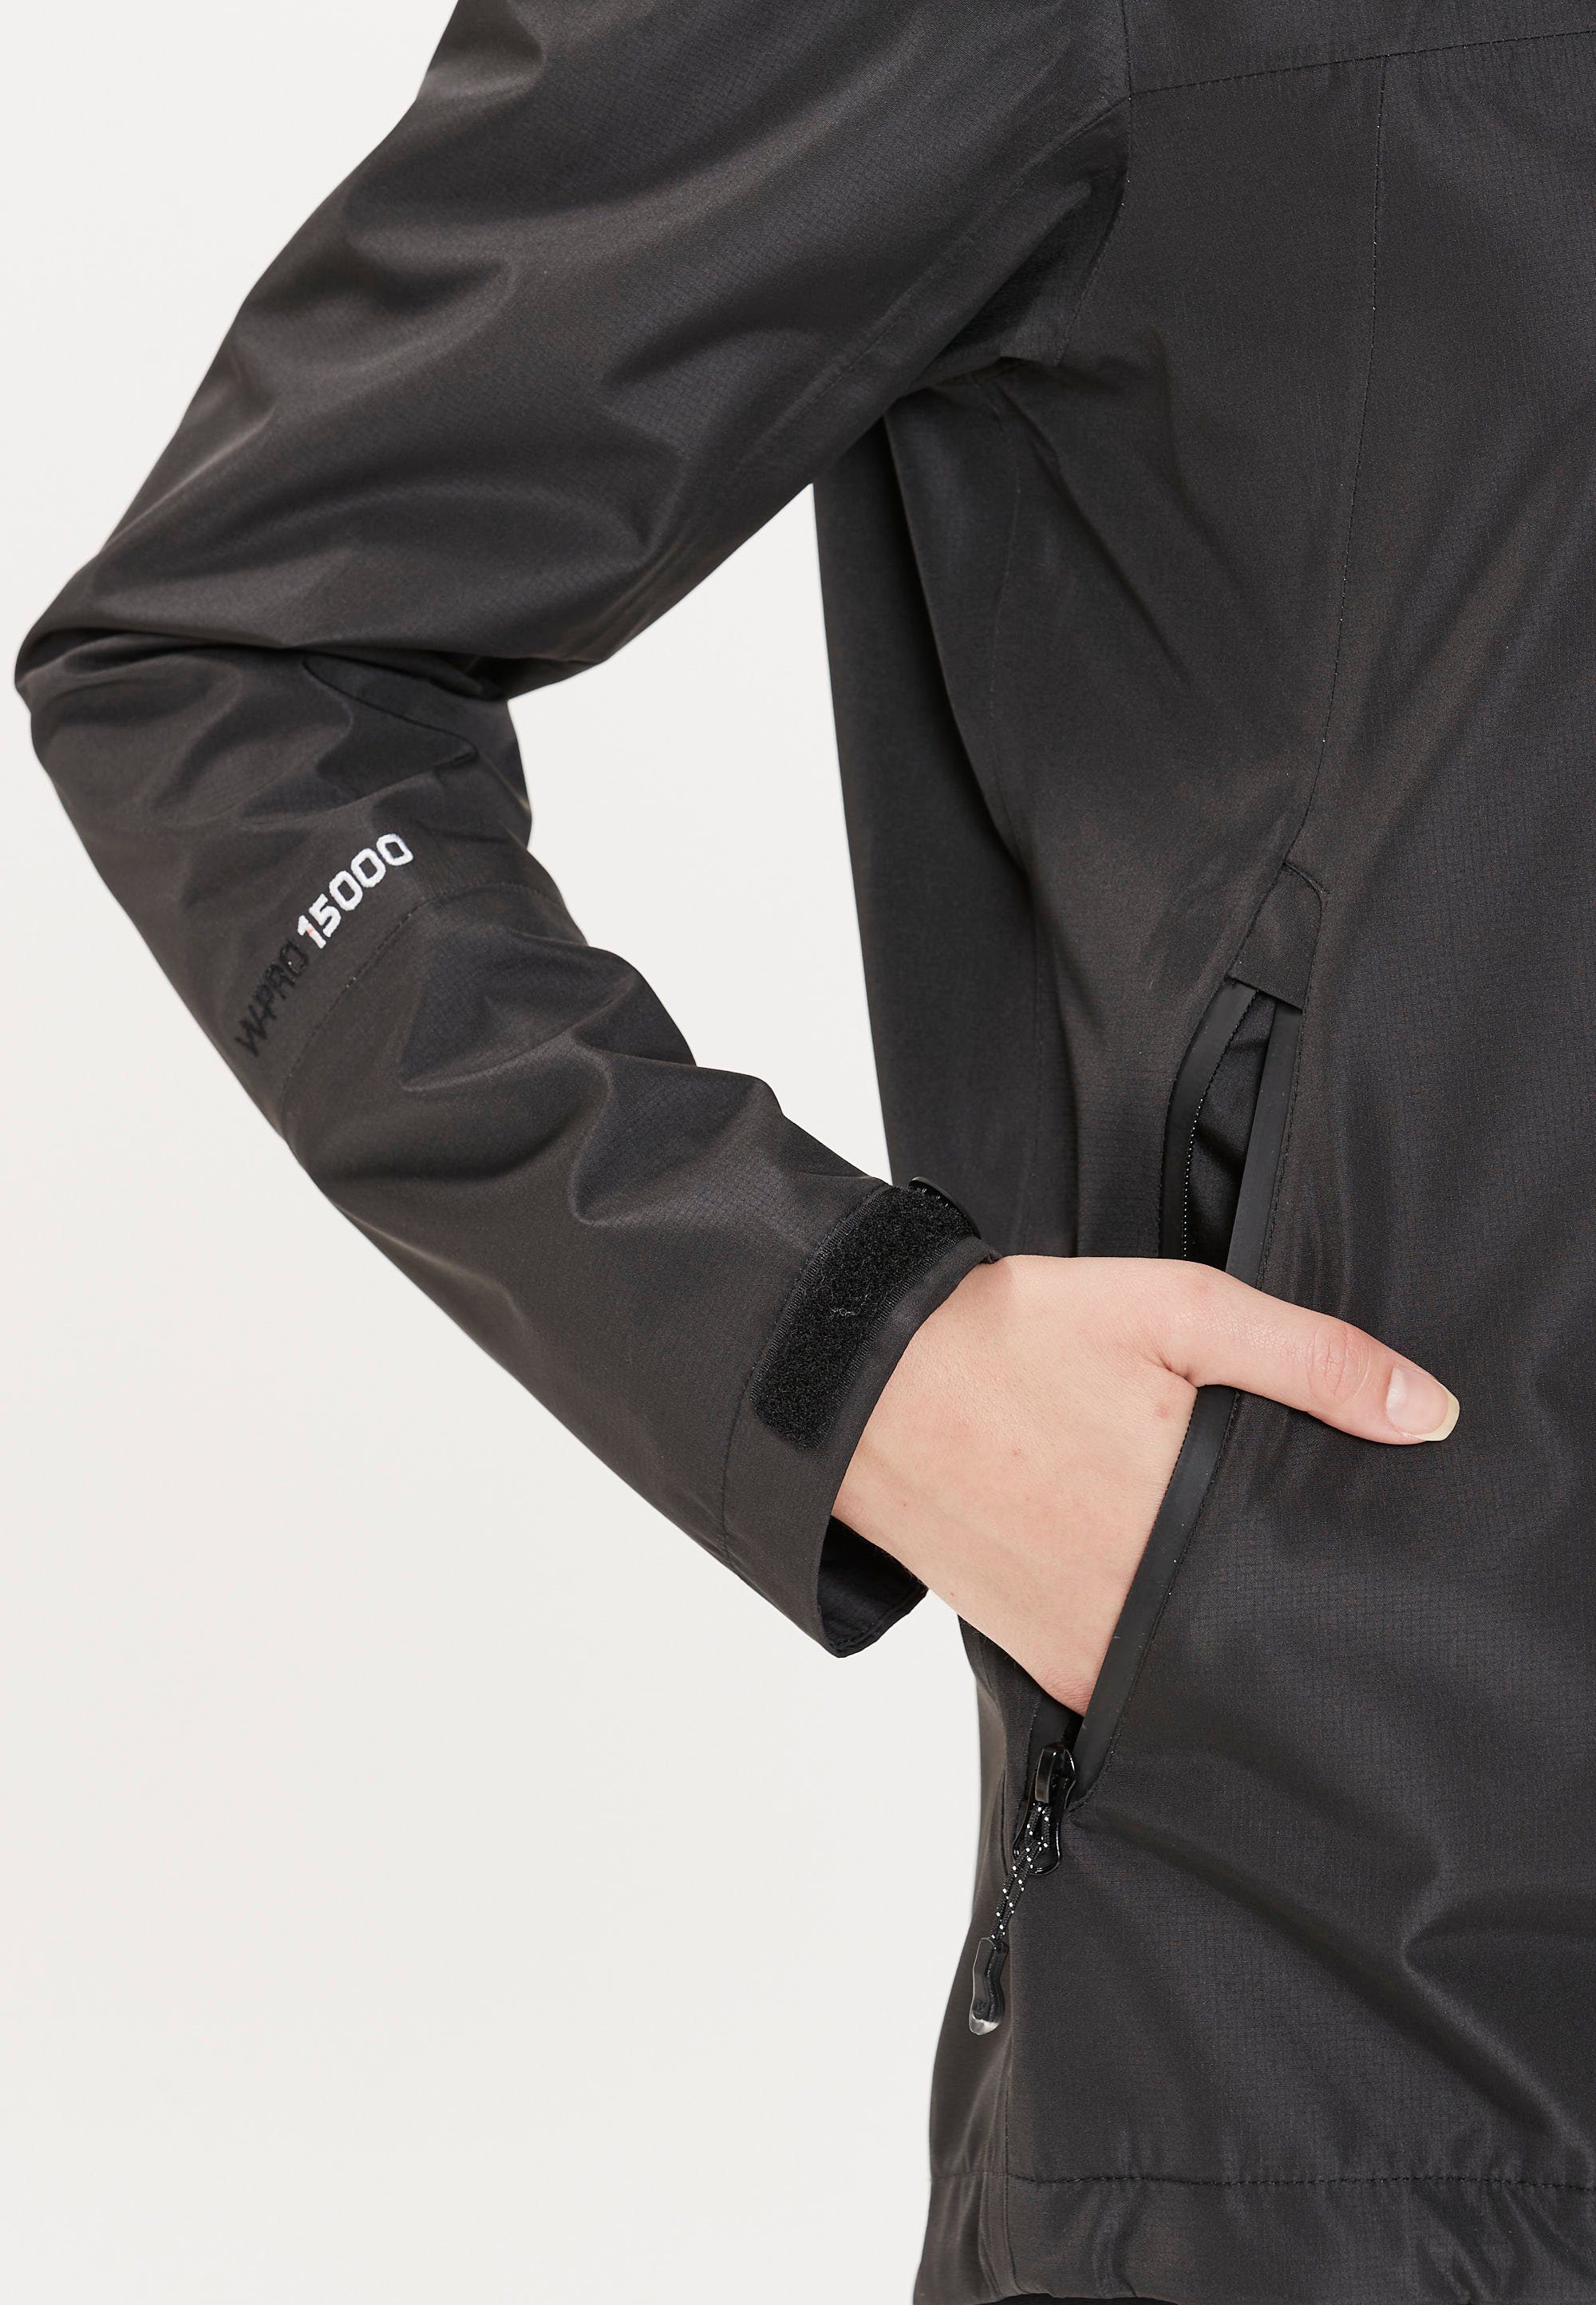 WHISTLER Softshelljacke BROOK W Shell W-PRO mit praktischer Kapuze schwarz 15000 Jacket